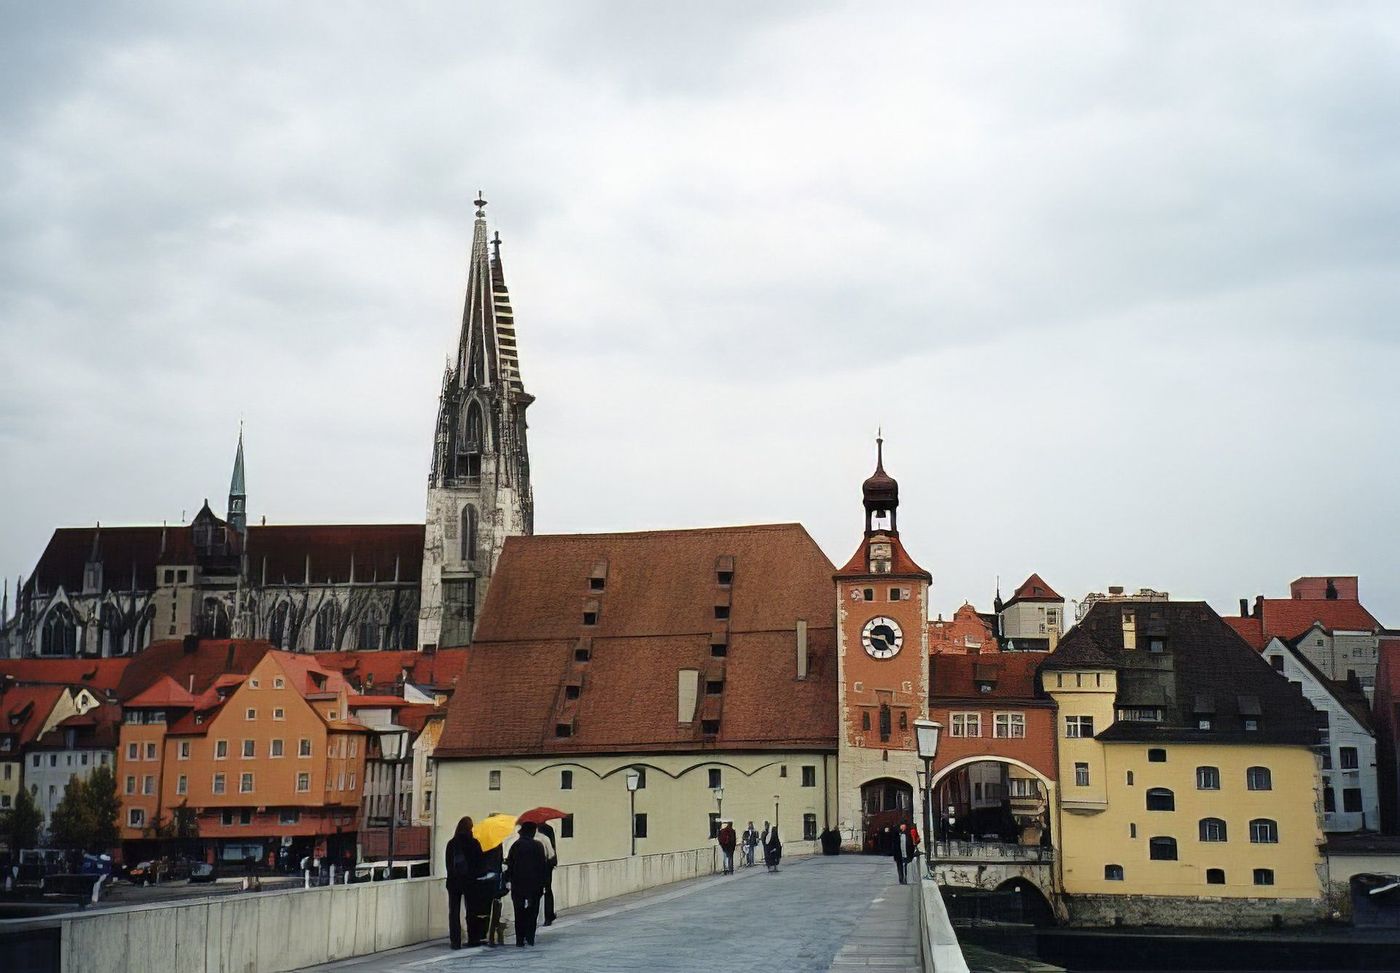 Regensburg (Ratisbonne)